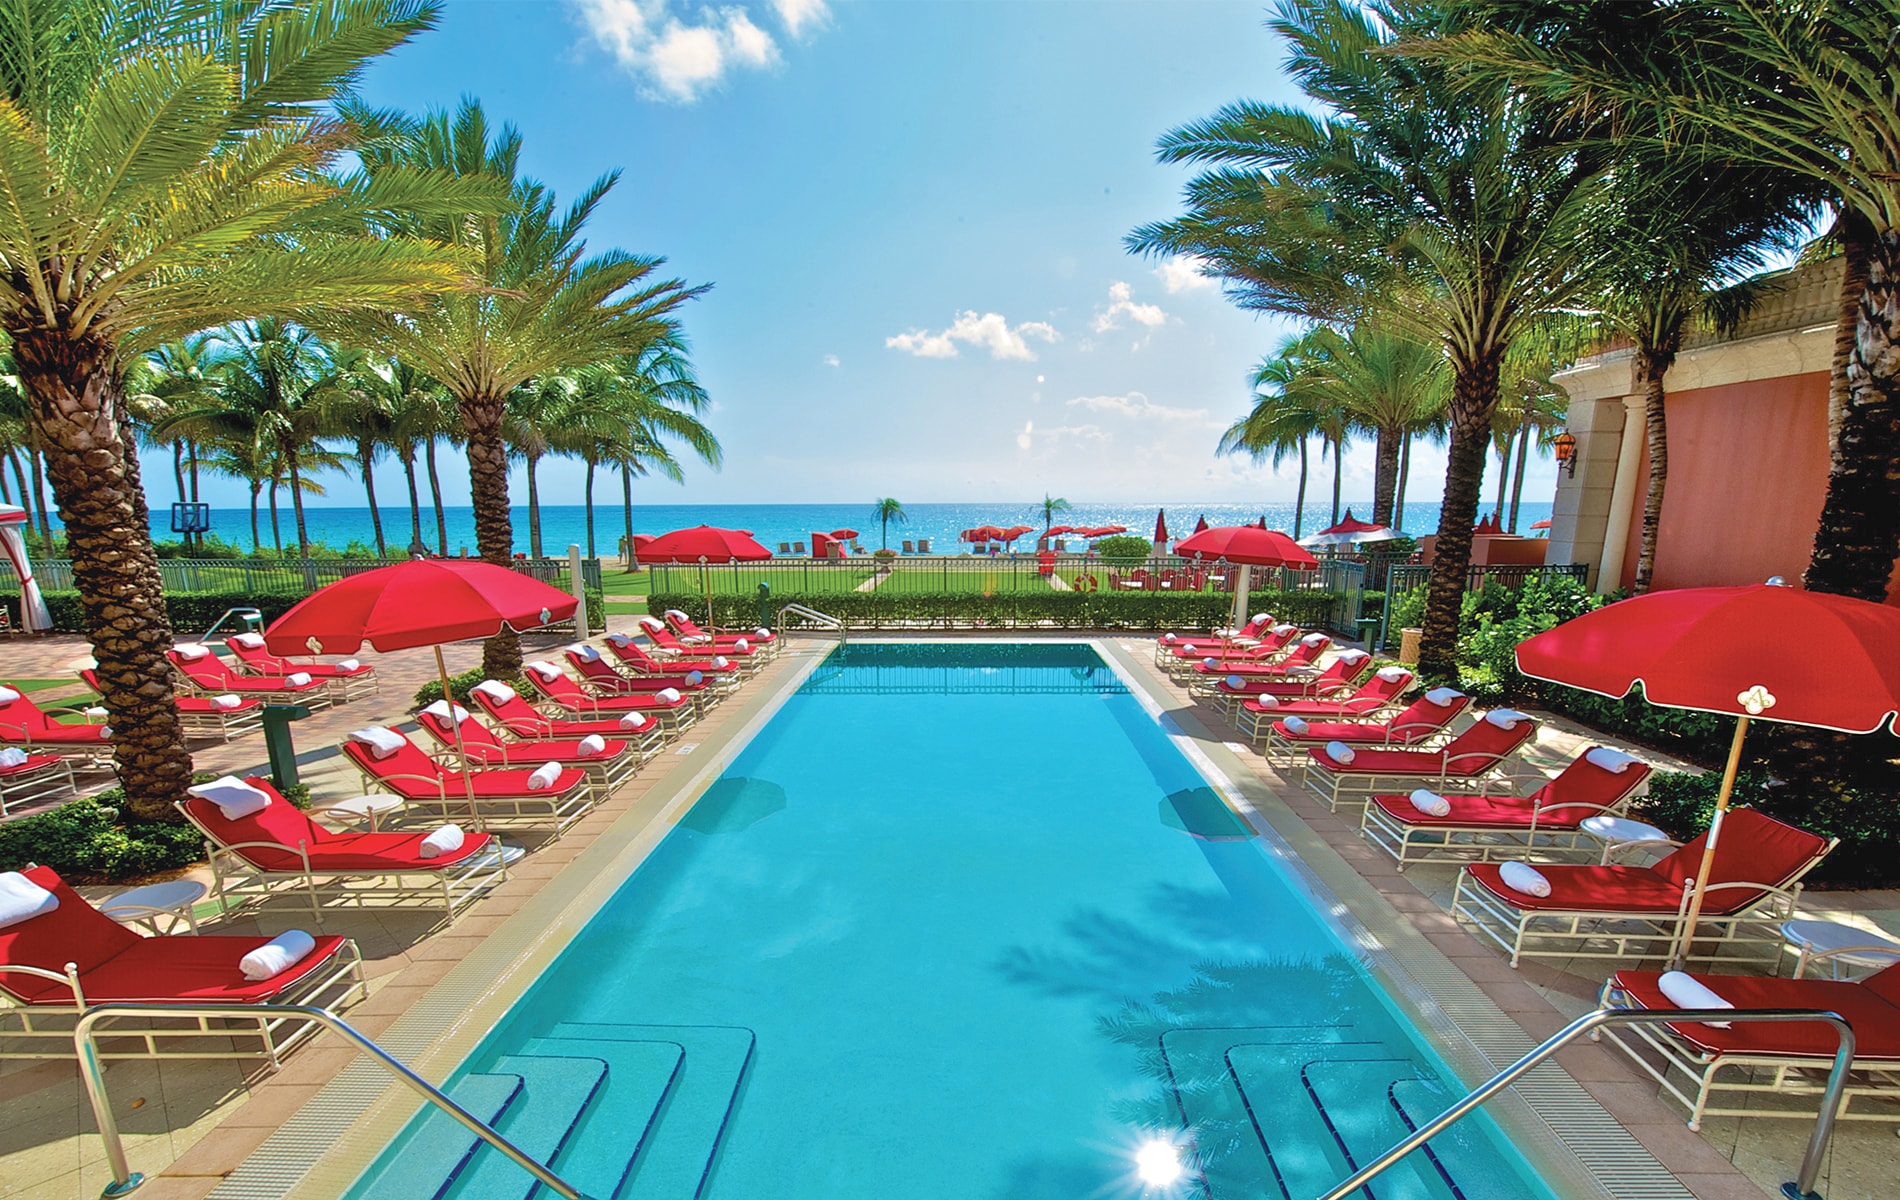 Acqualine Resort in Miami Florida. VIE Magazine January 2018.